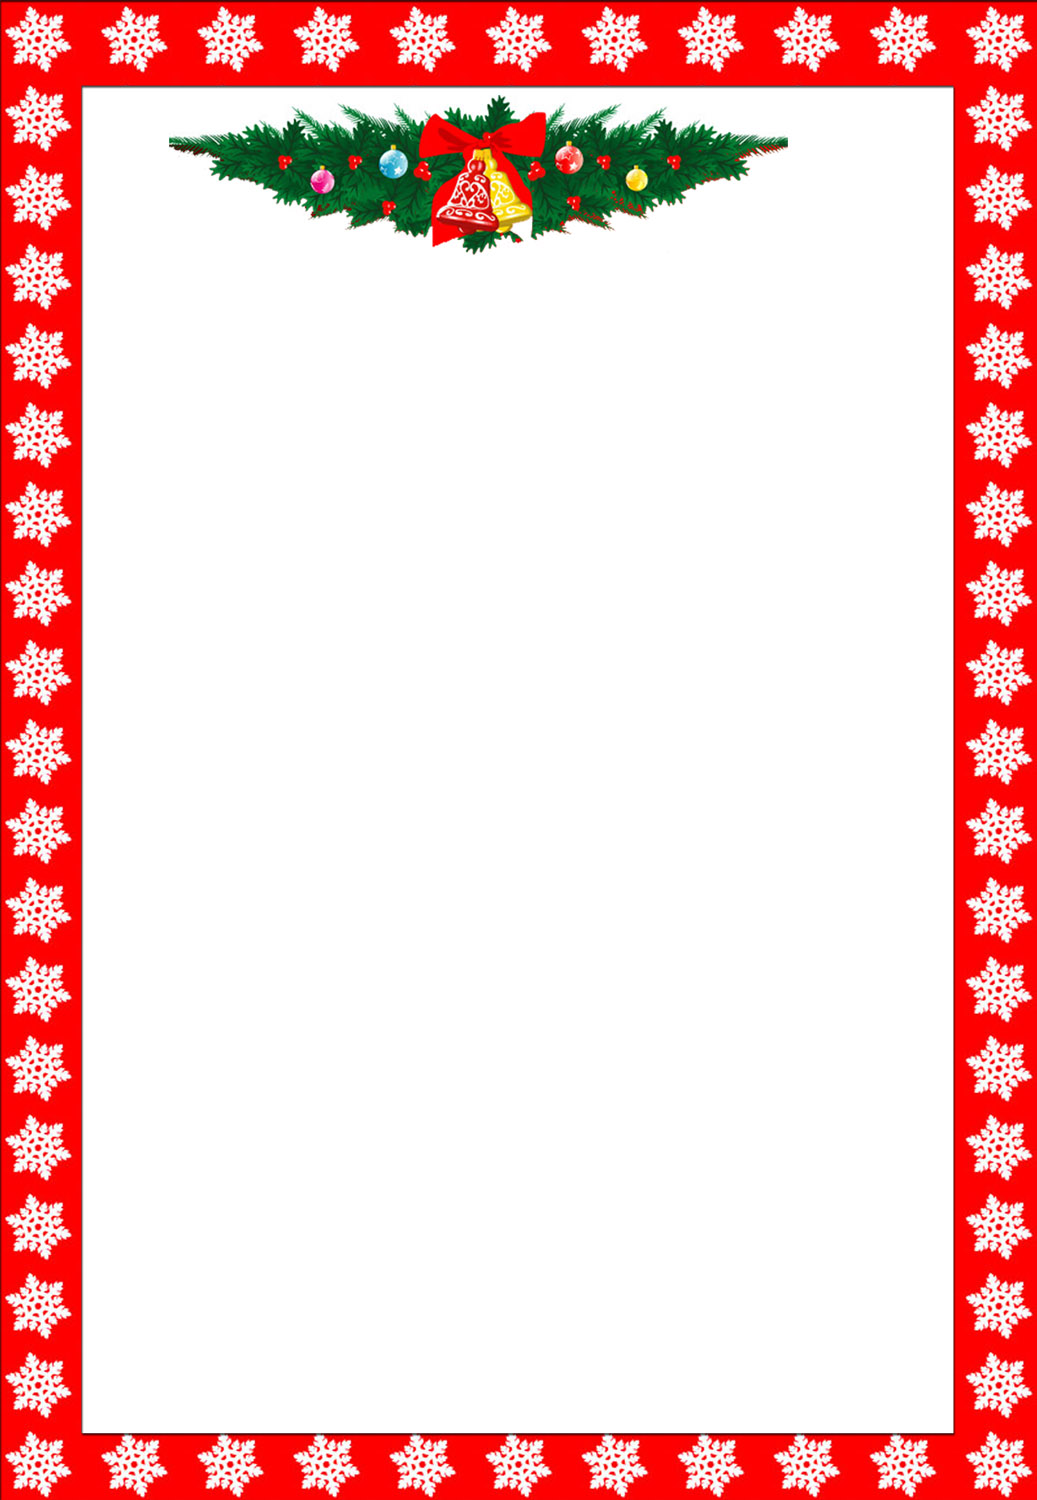 Free Christmas Clipart Border - Christmas Frames Clip Art